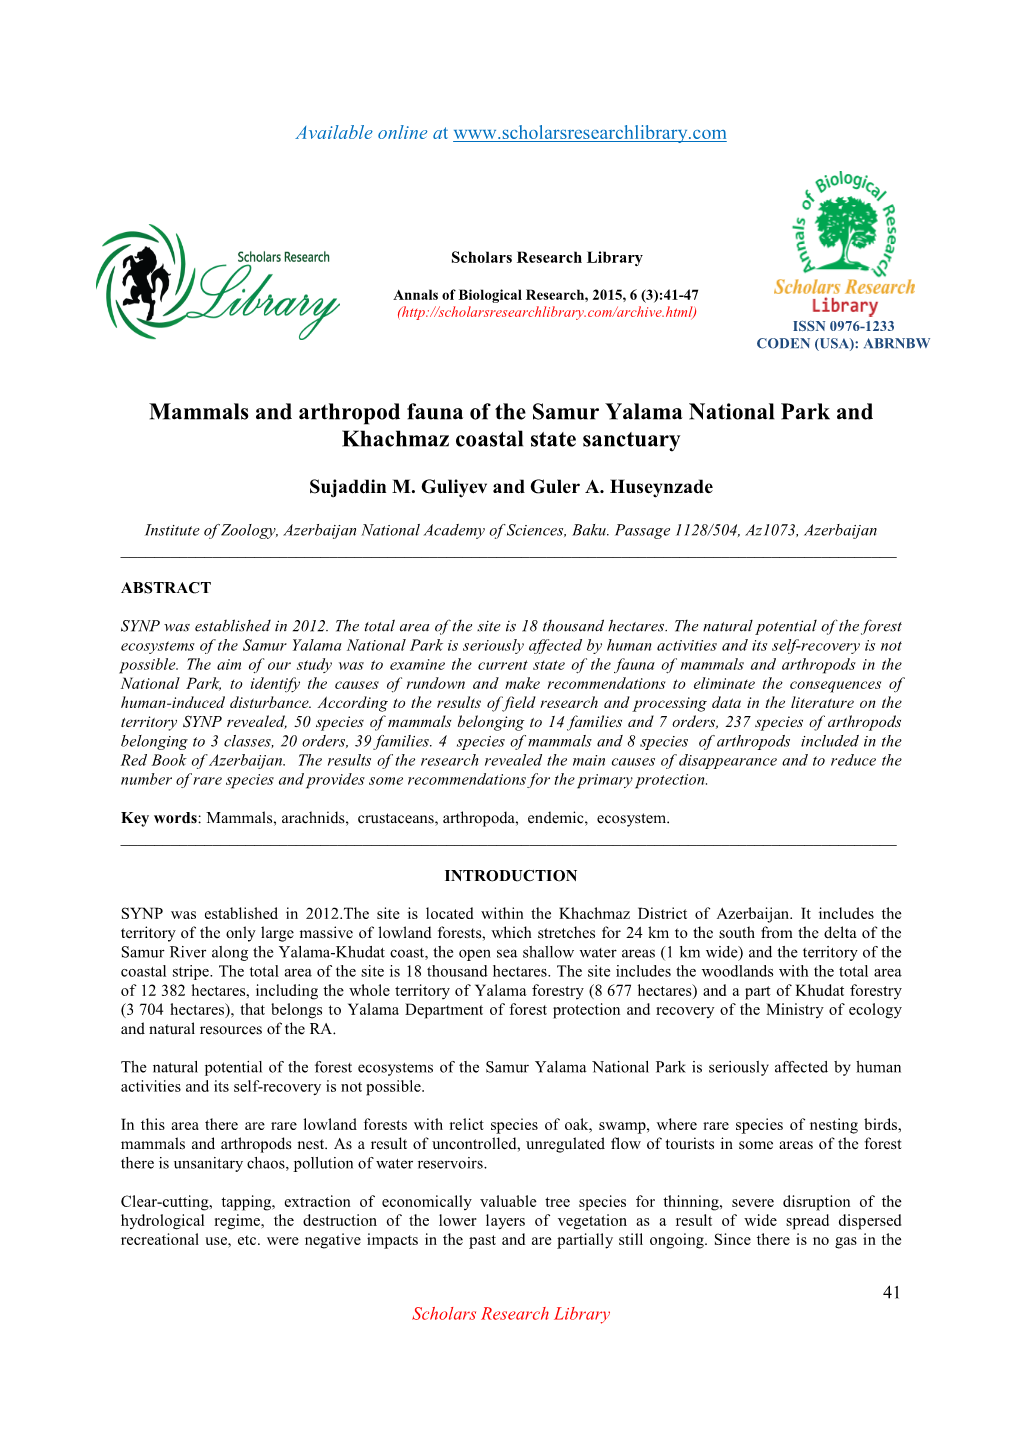 Mammals and Arthropod Fauna of the Samur Yalama National Park and Khachmaz Coastal State Sanctuary